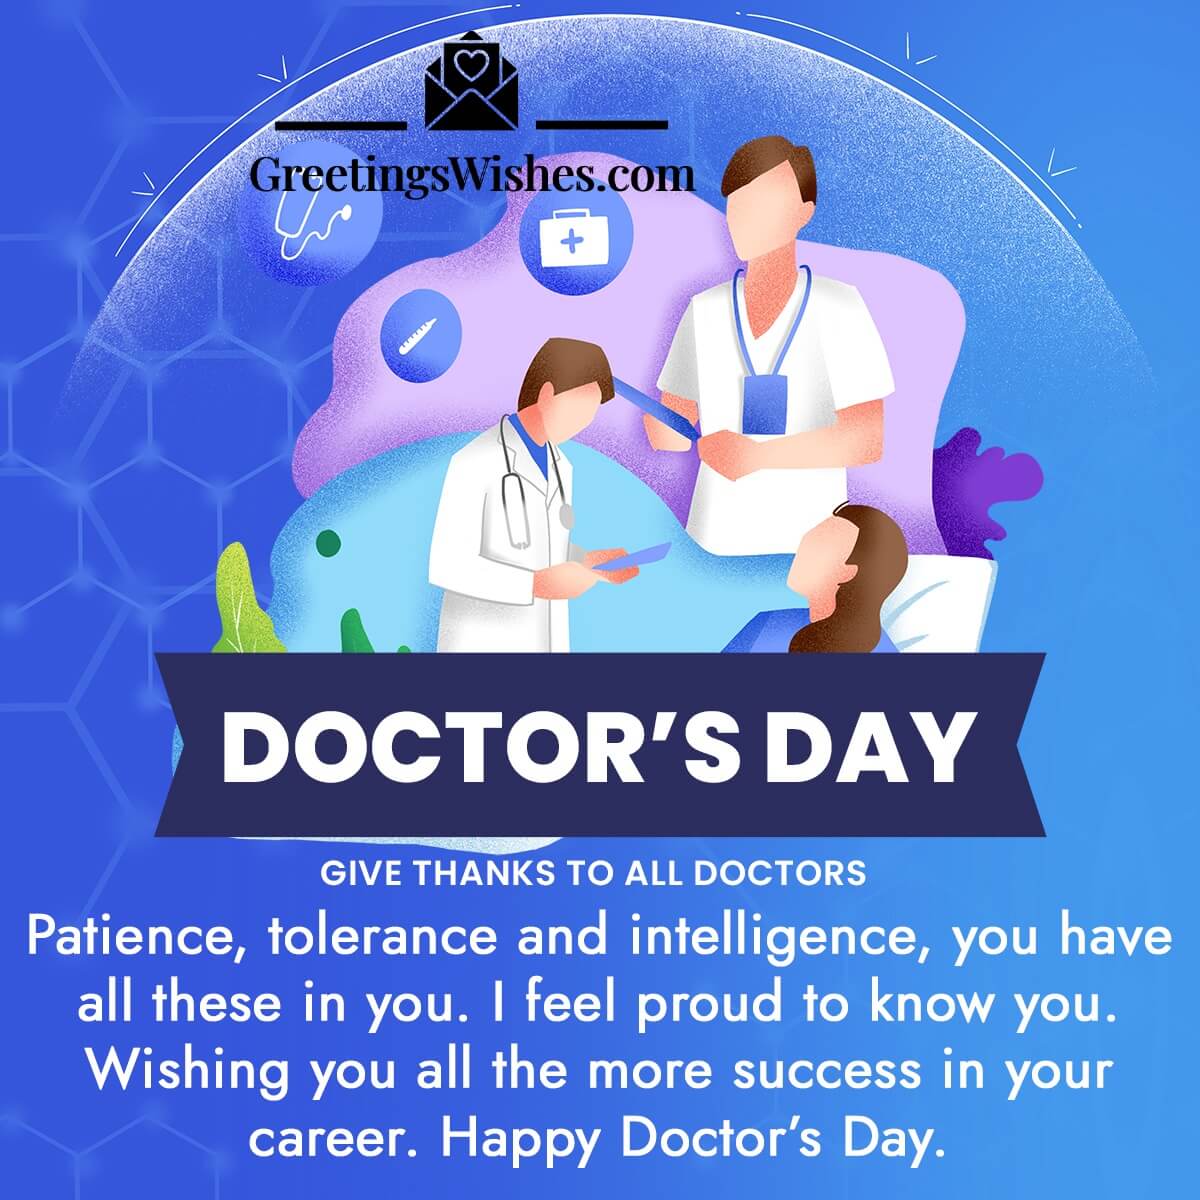 Happy Doctors’ Day Wish Image